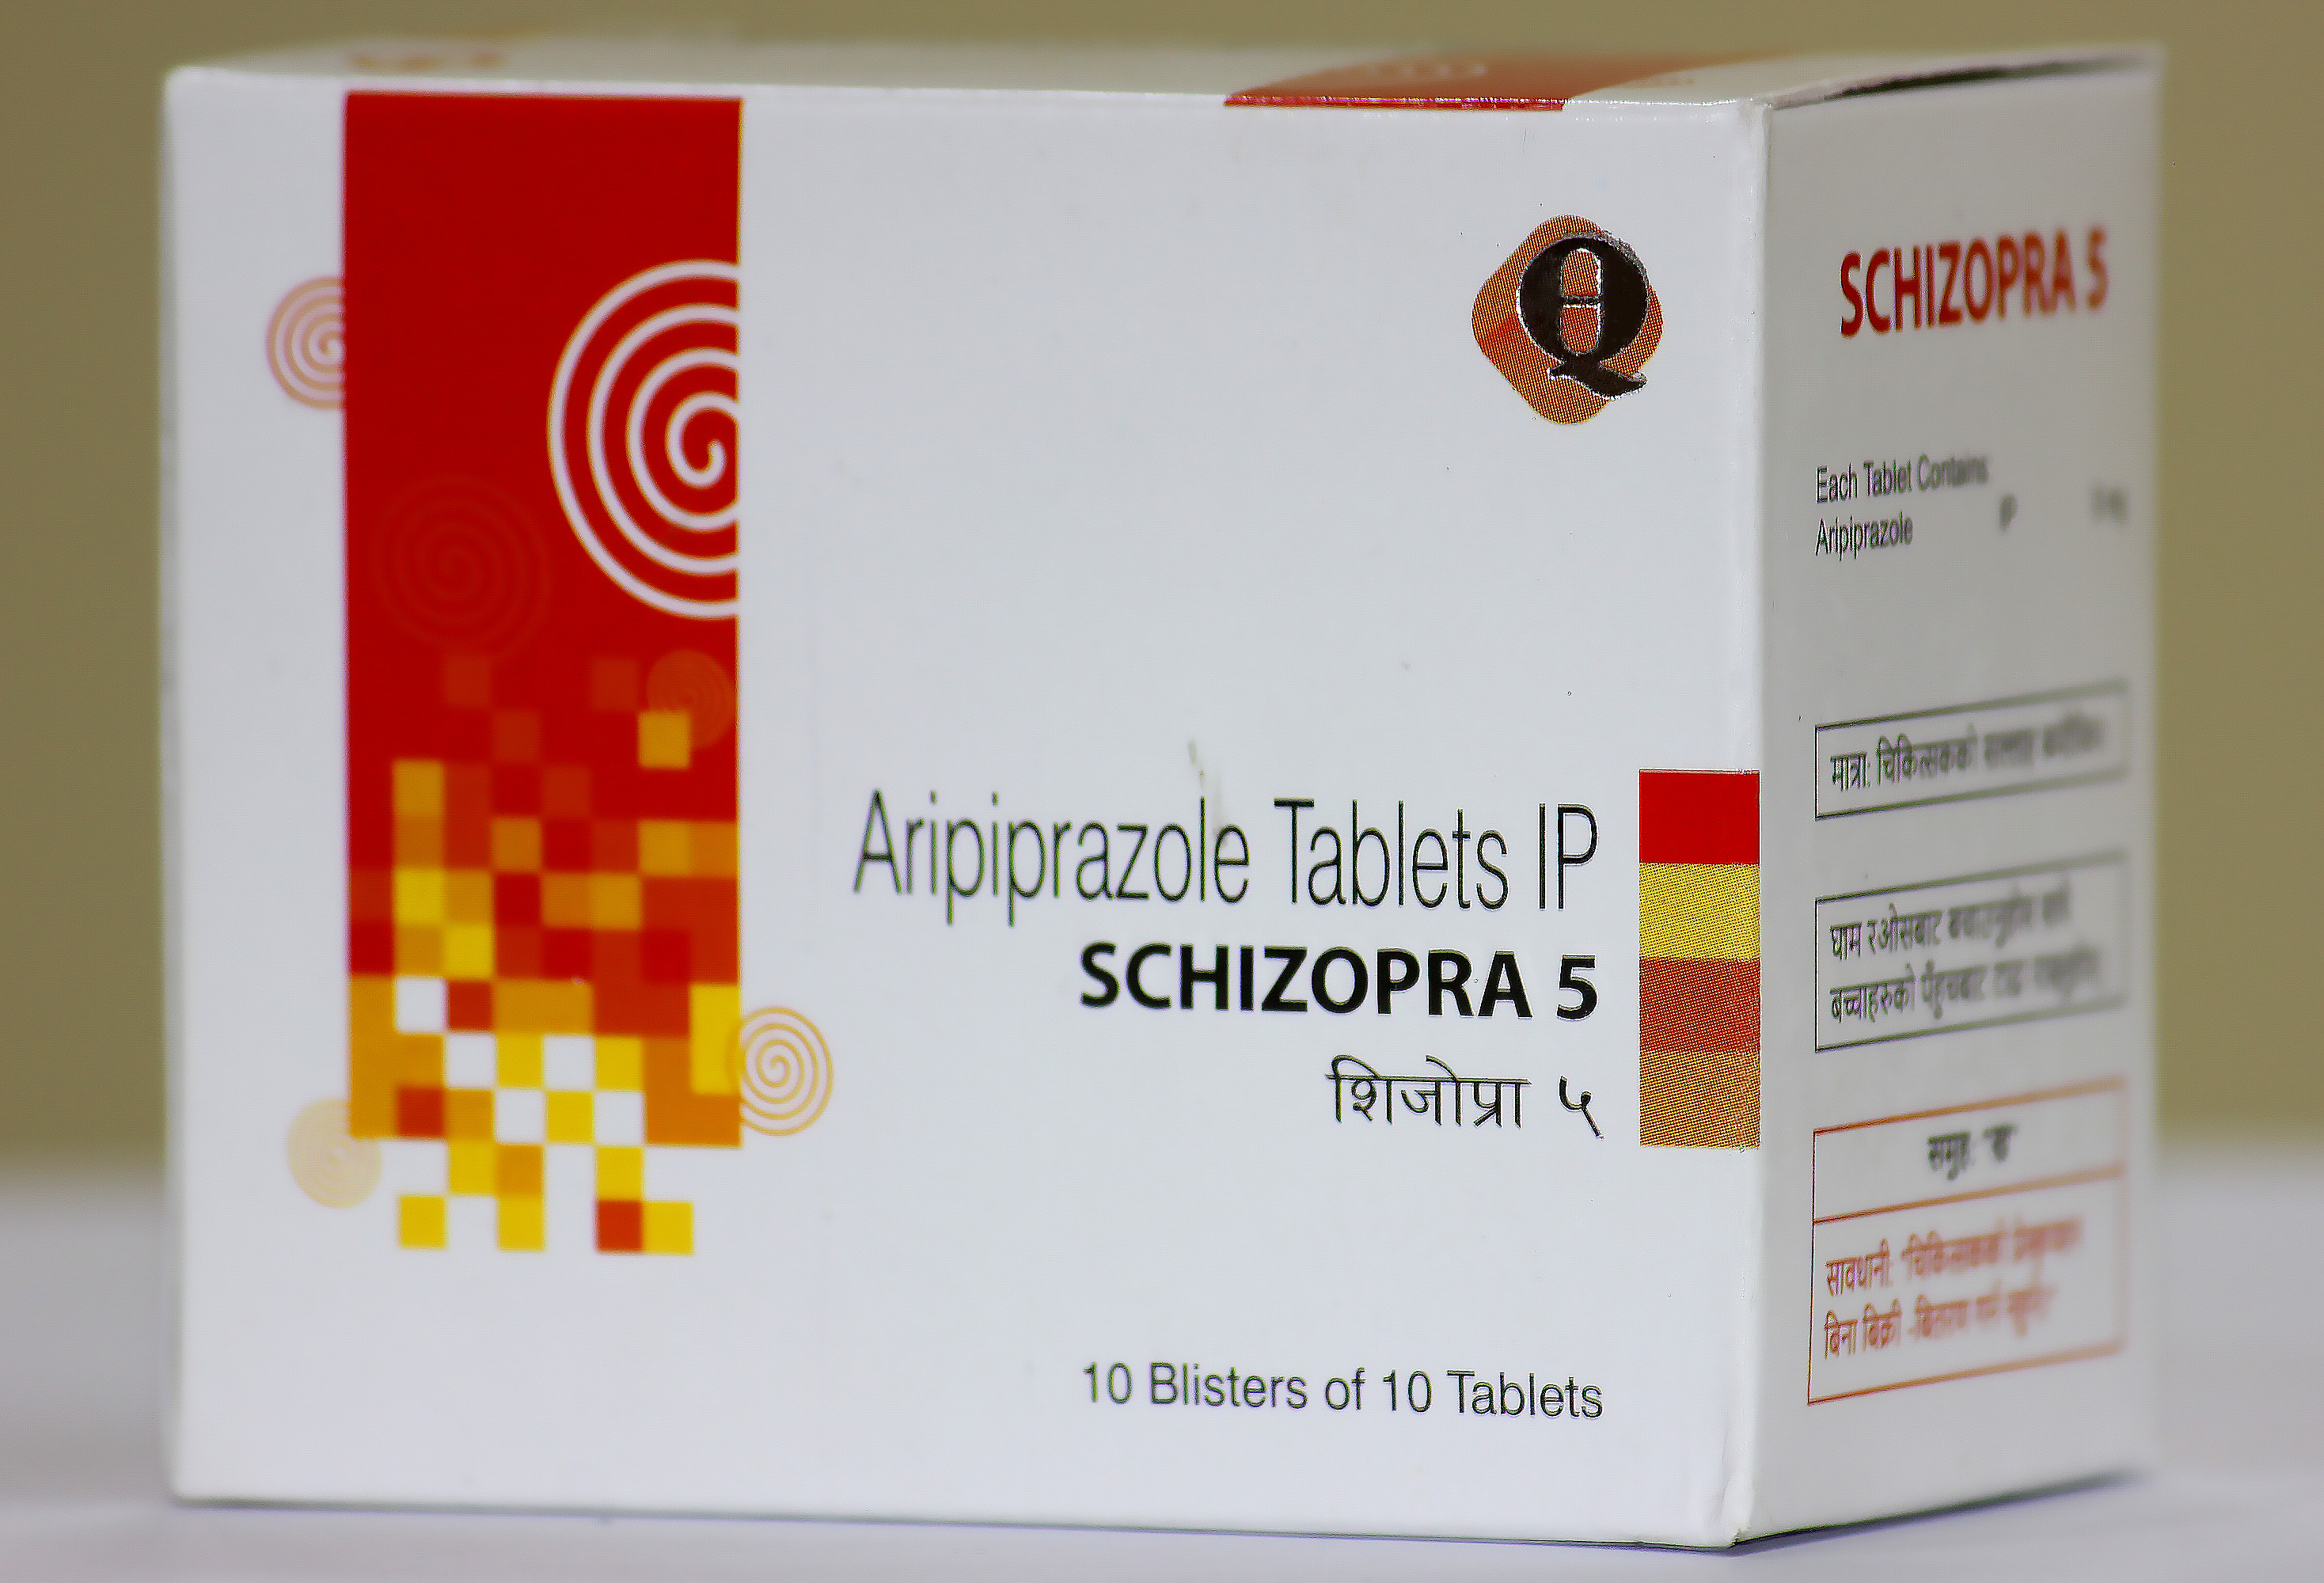 Schizopra 5